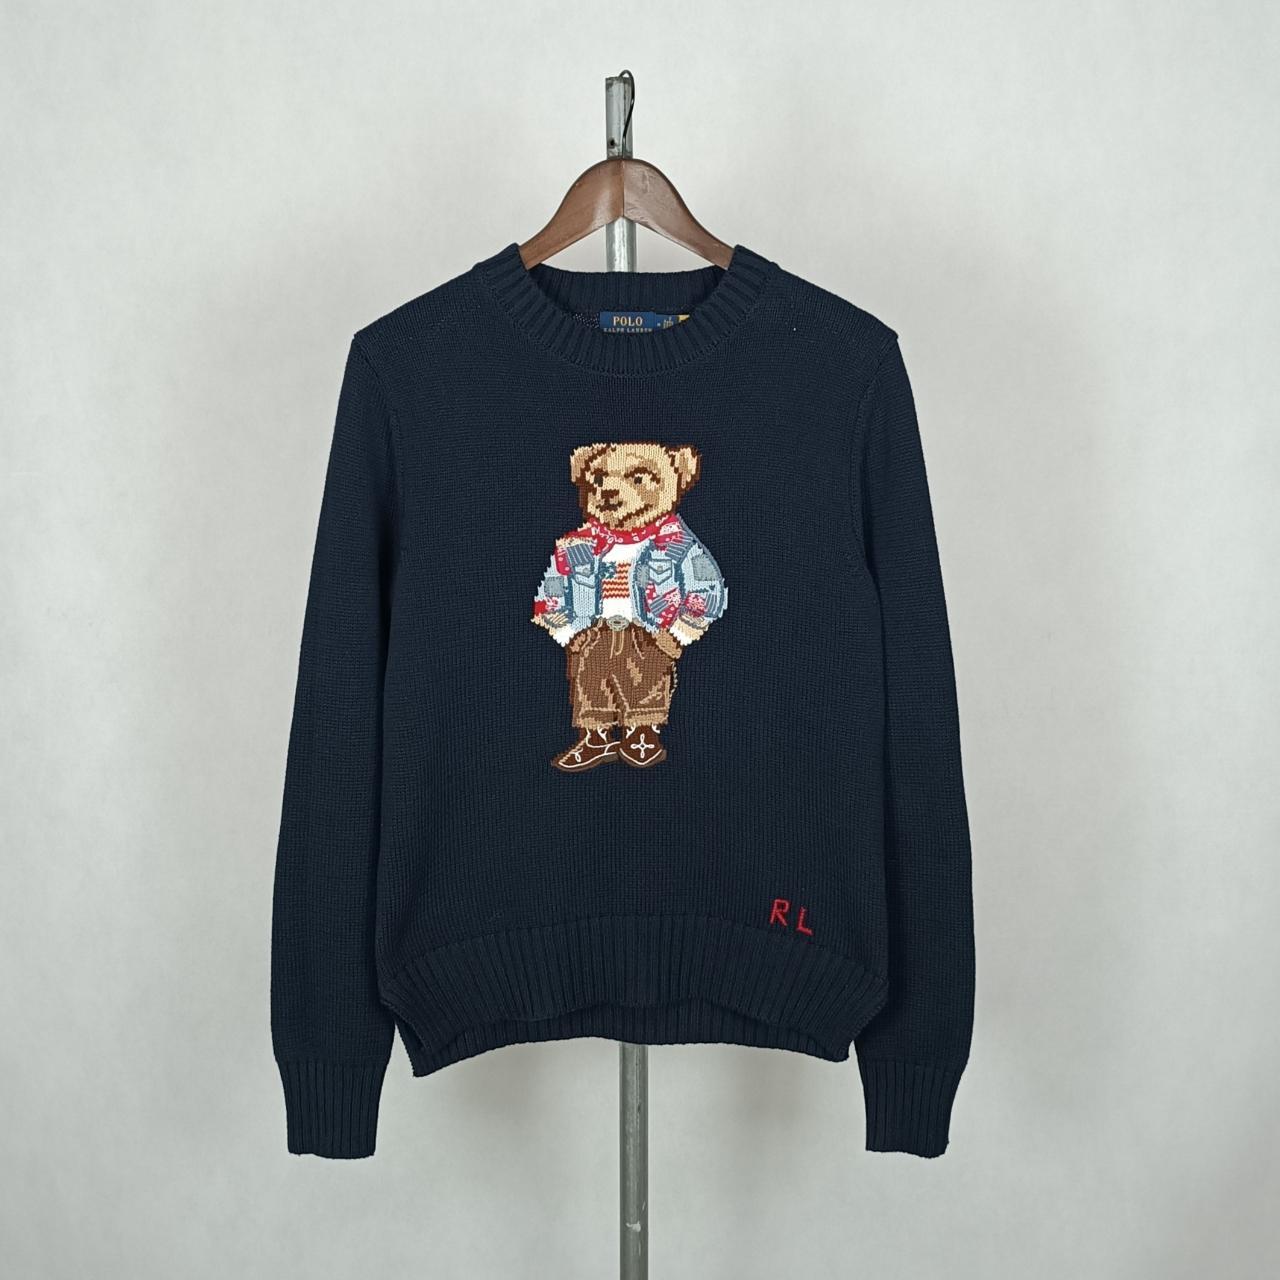 Polo Ralph Lauren Polo Bear Knitted Sweater Size... - Depop